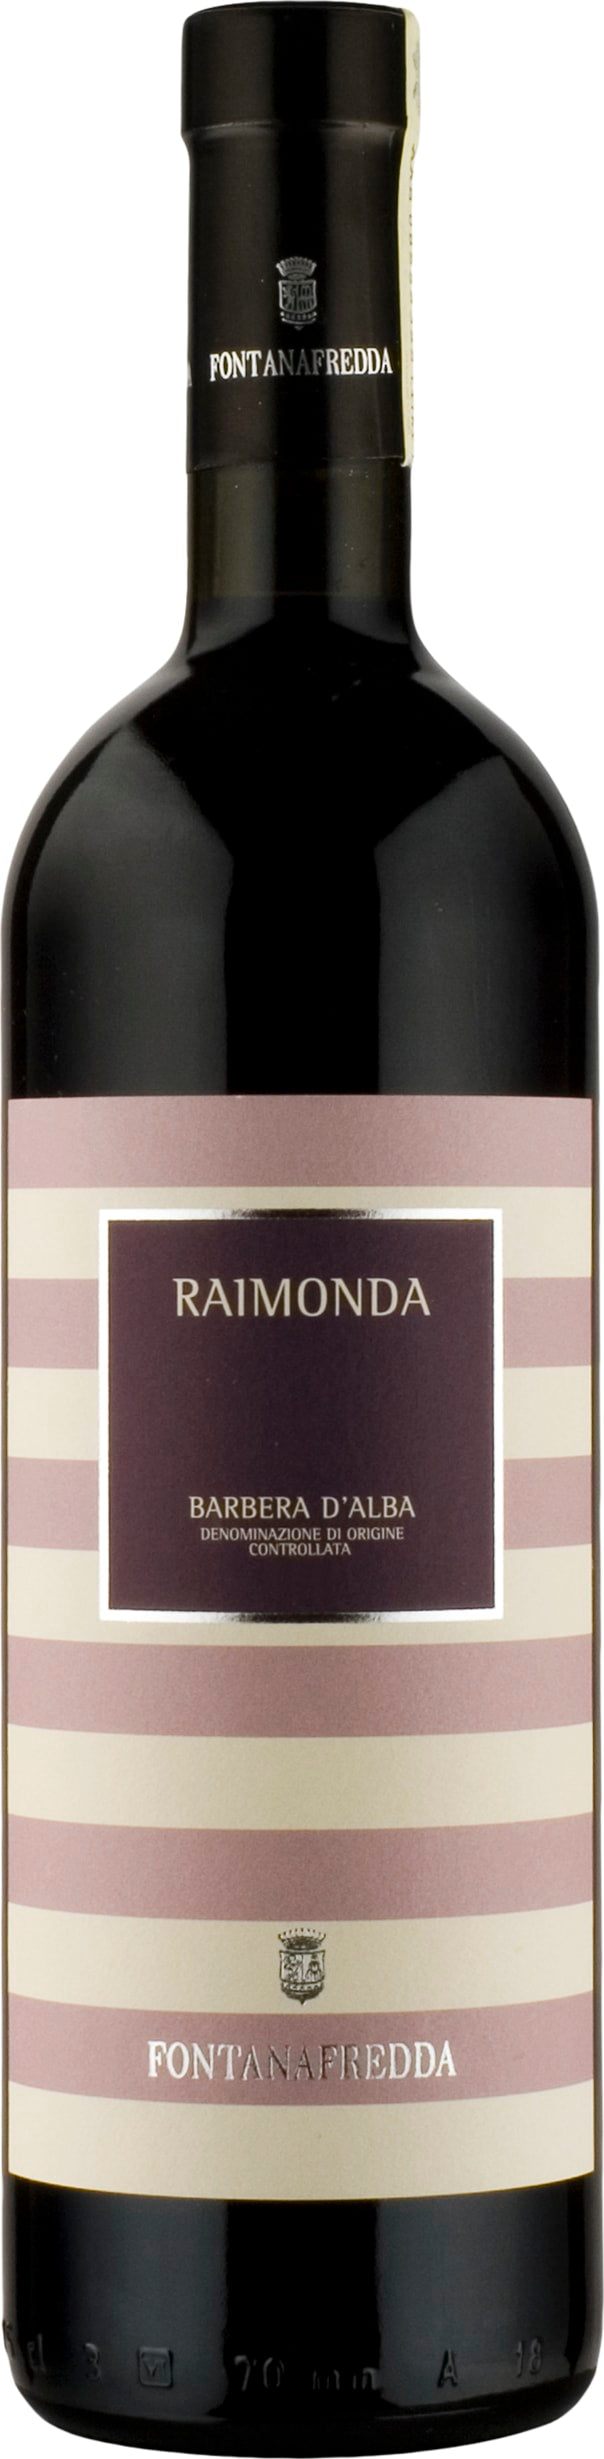 Fontanafredda Barbera d'Alba DOC Raimonda 2021 75cl - Buy Fontanafredda Wines from GREAT WINES DIRECT wine shop